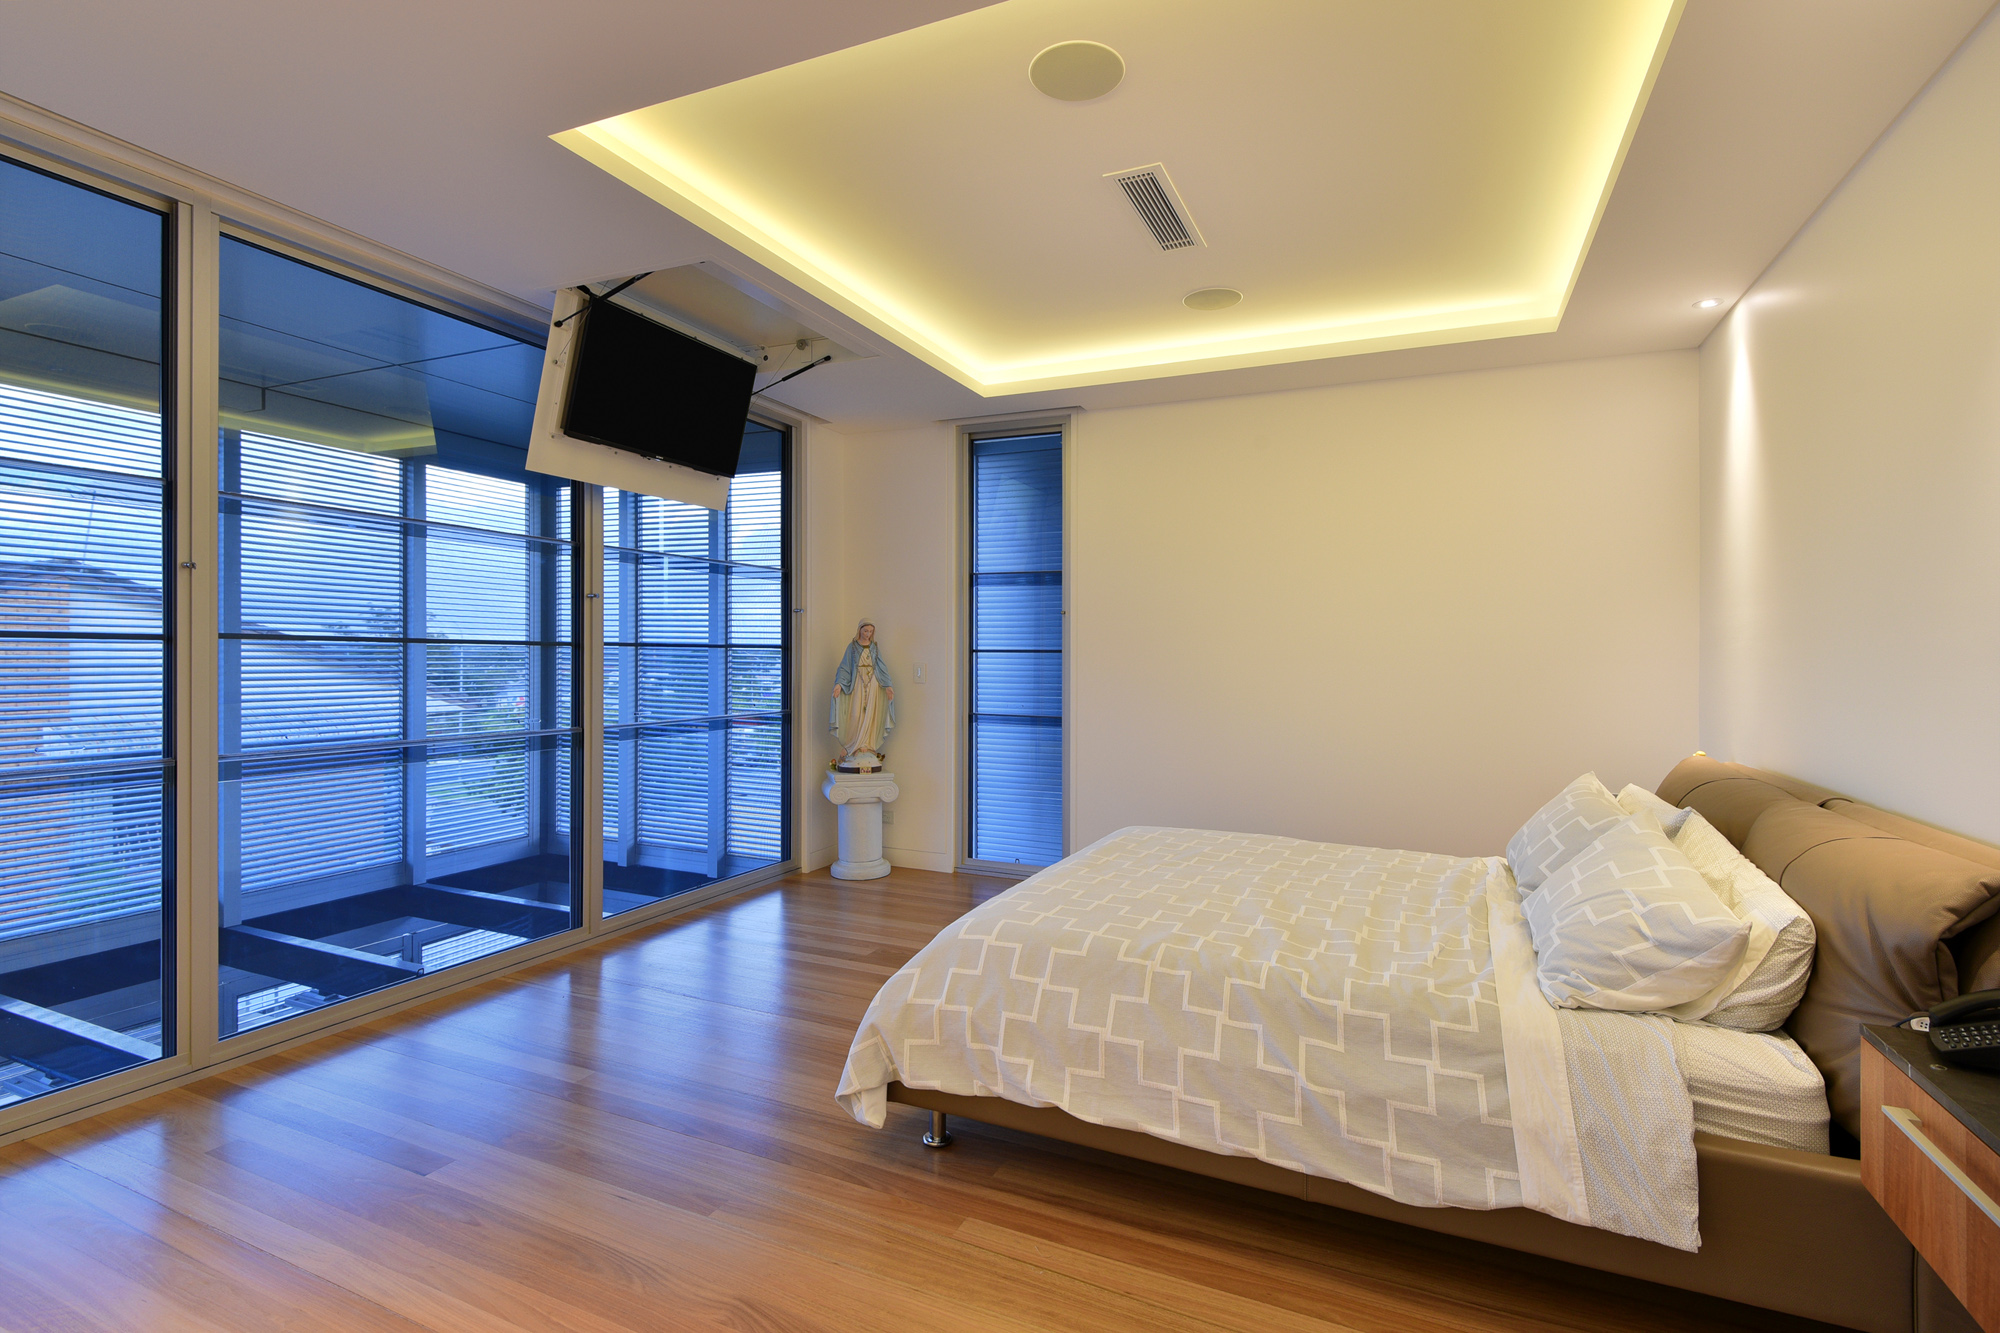 Important new regulations for bedroom windows in Australia